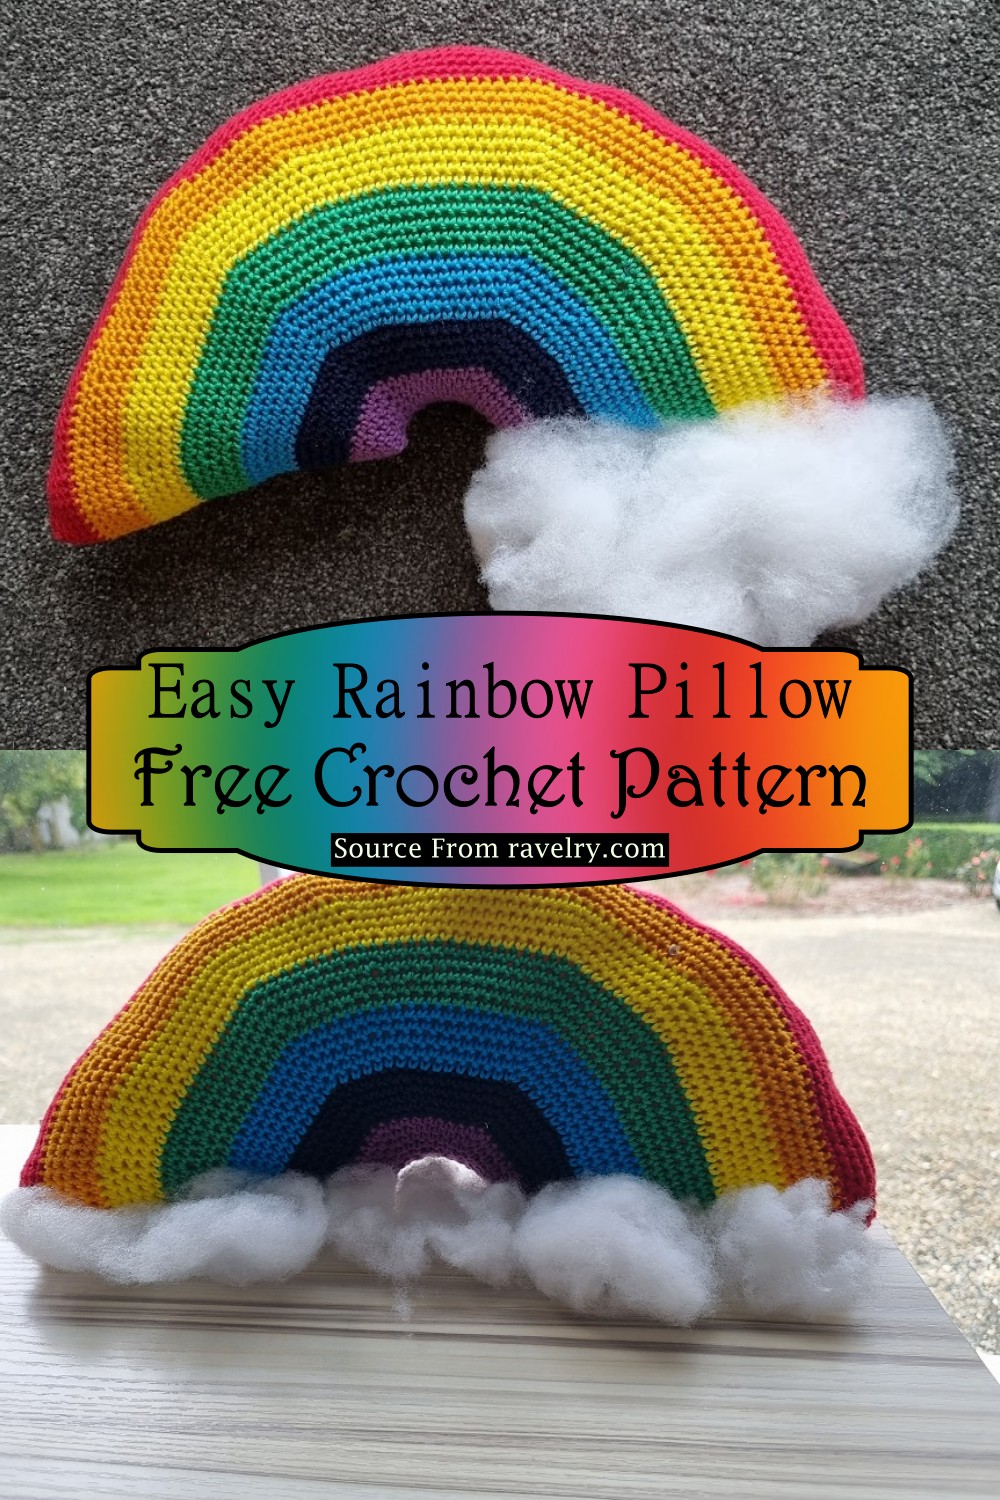 Easy Rainbow Pillow